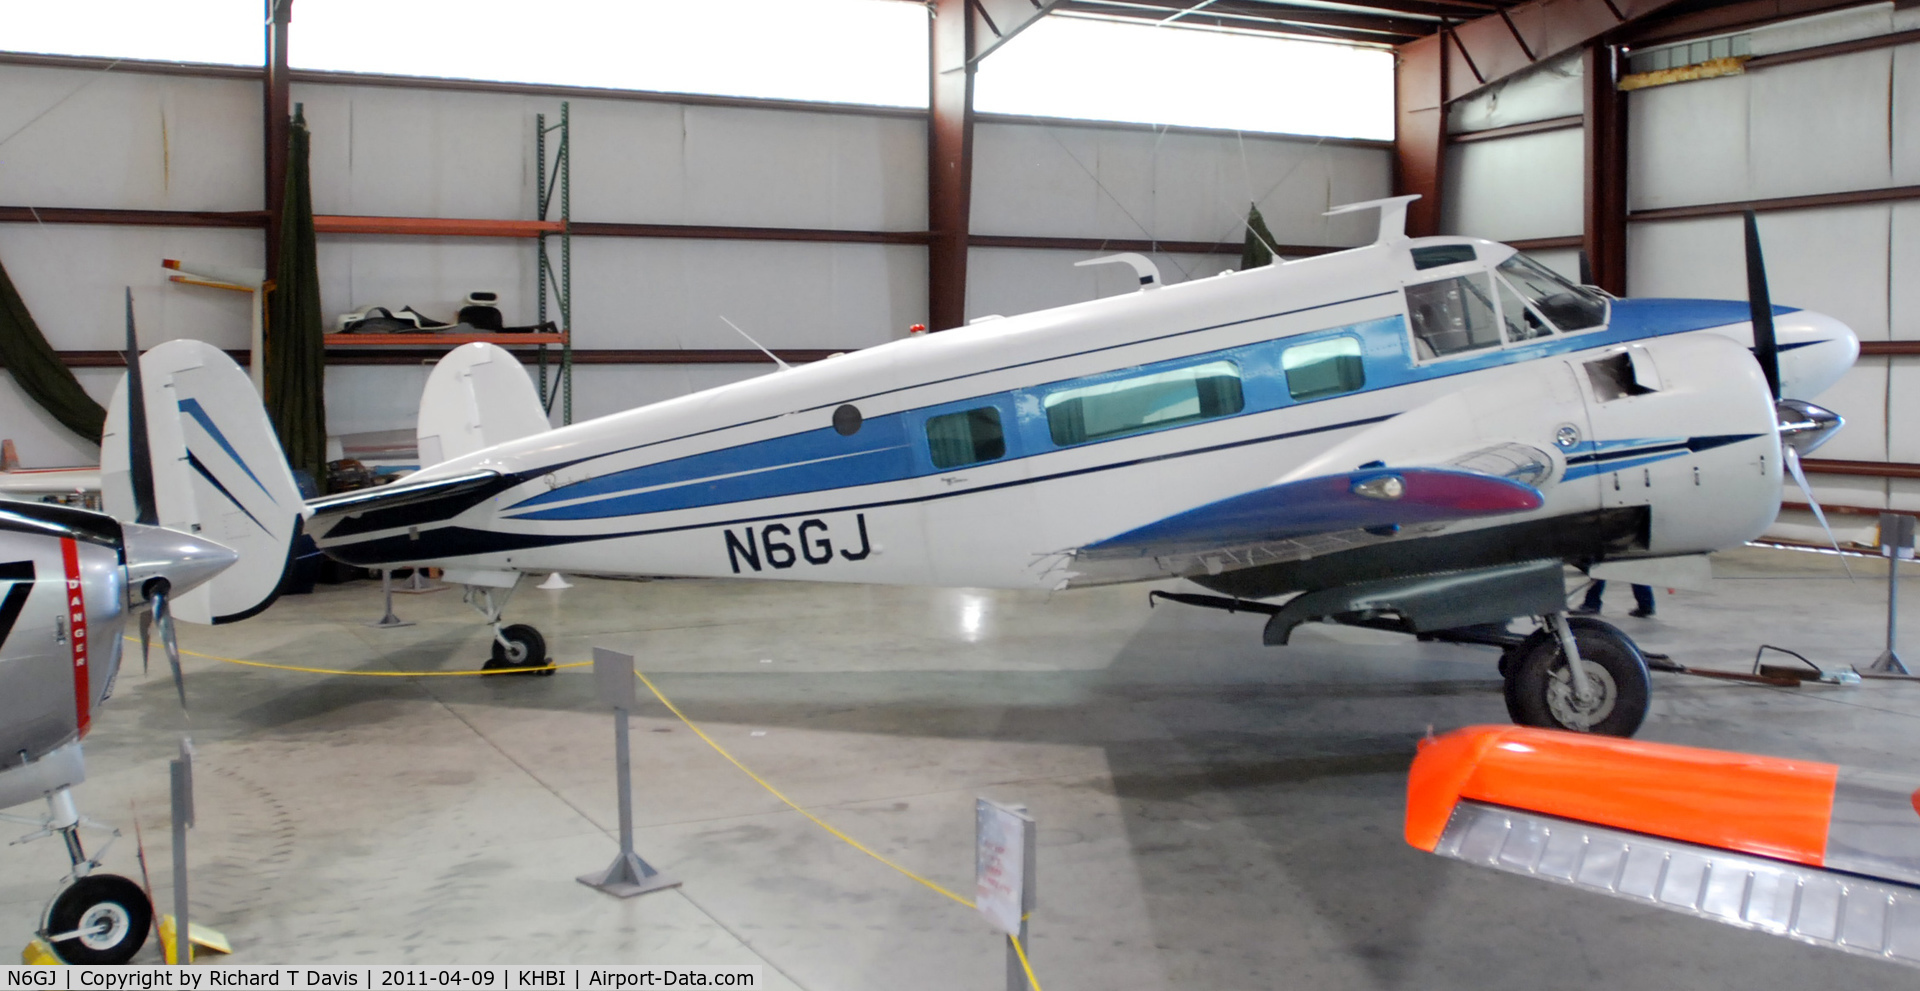 N6GJ, 1962 Beech H-18 C/N BA-633, 1962 Super Beech, Super 18 at the N.C. Aviation Museum in Asheboro N.C.......